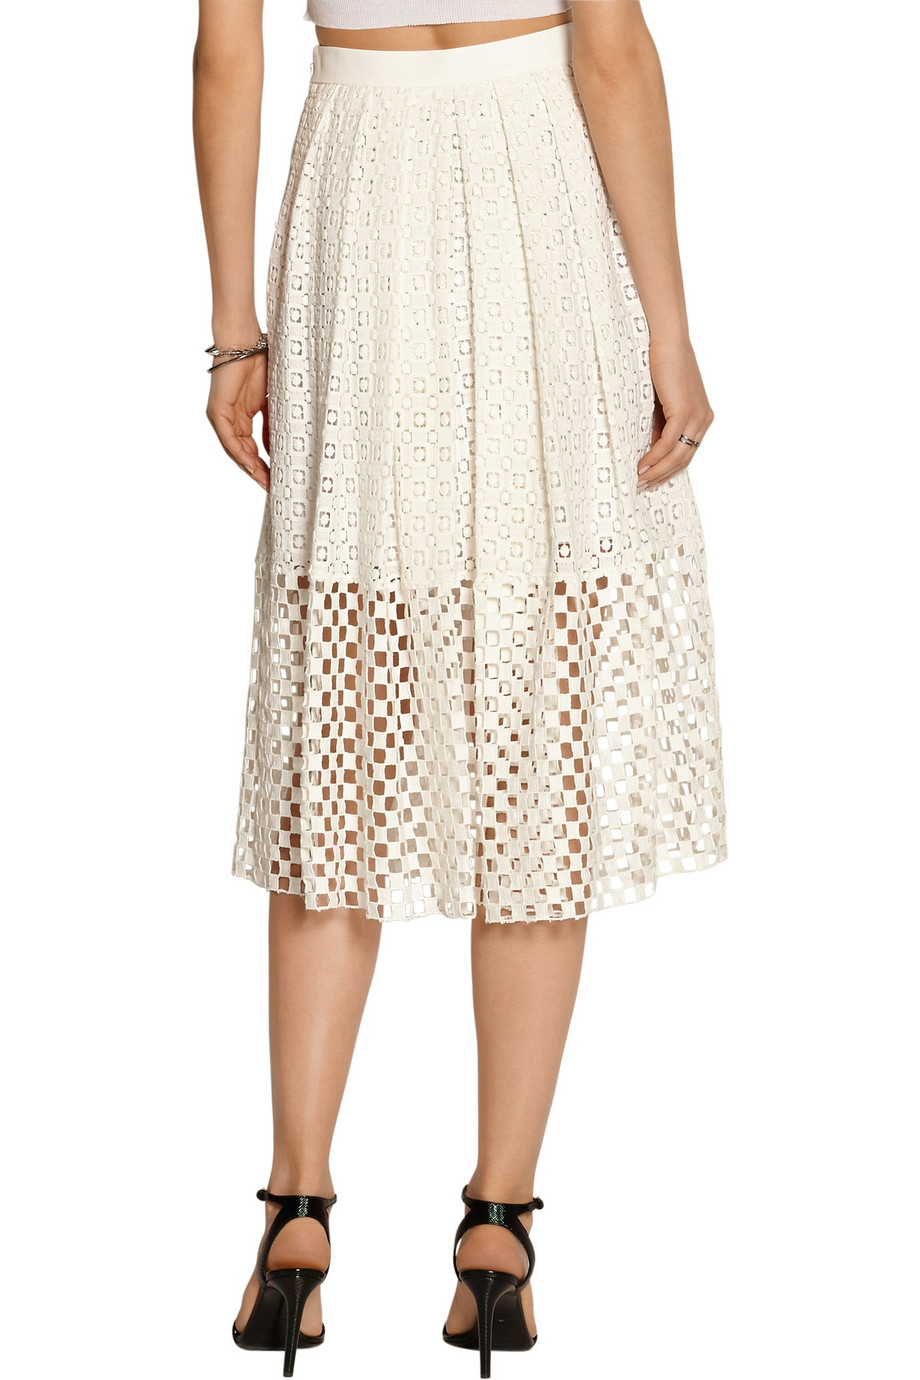 Tibi Sonoran Eyelet-Cotton Skirt in Ivory (White) - Lyst